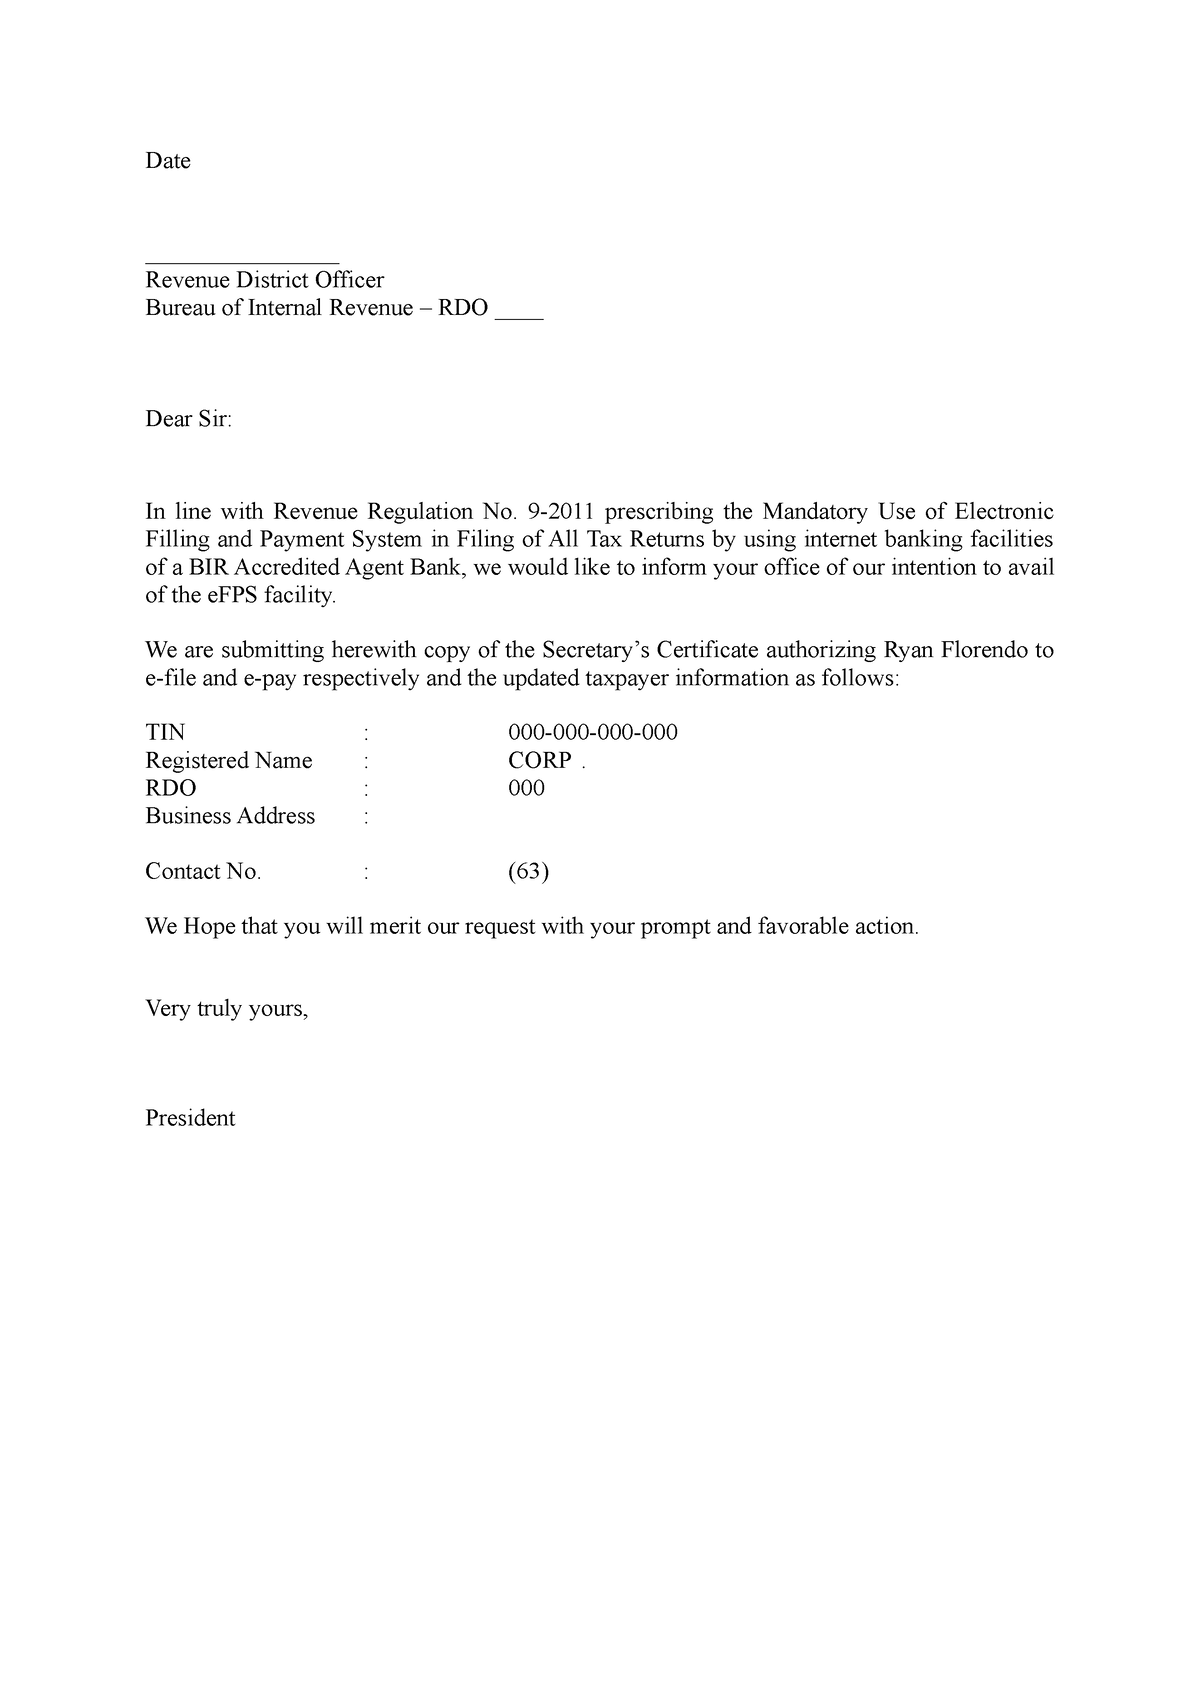 Letter of Intent for EFPS - Date Revenue District Officer Bureau of ...